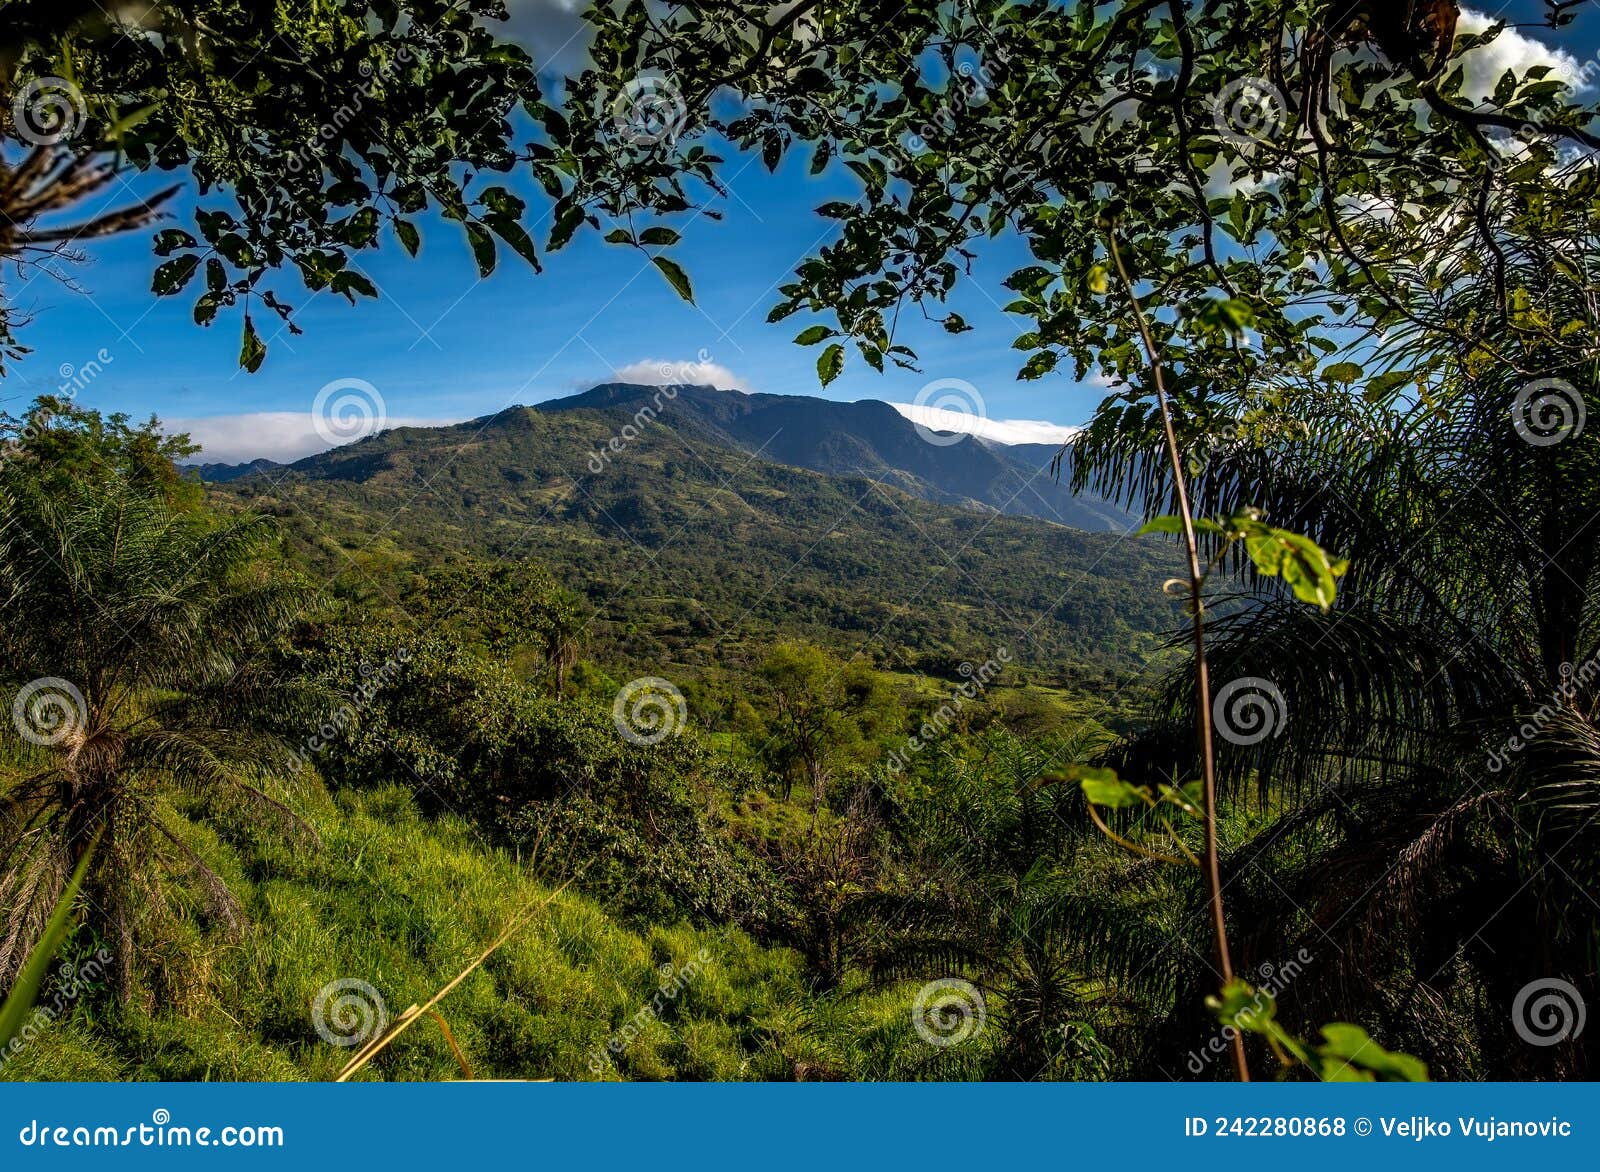 panama mountainous region reserva forestal de fortuna near the town of punta pena